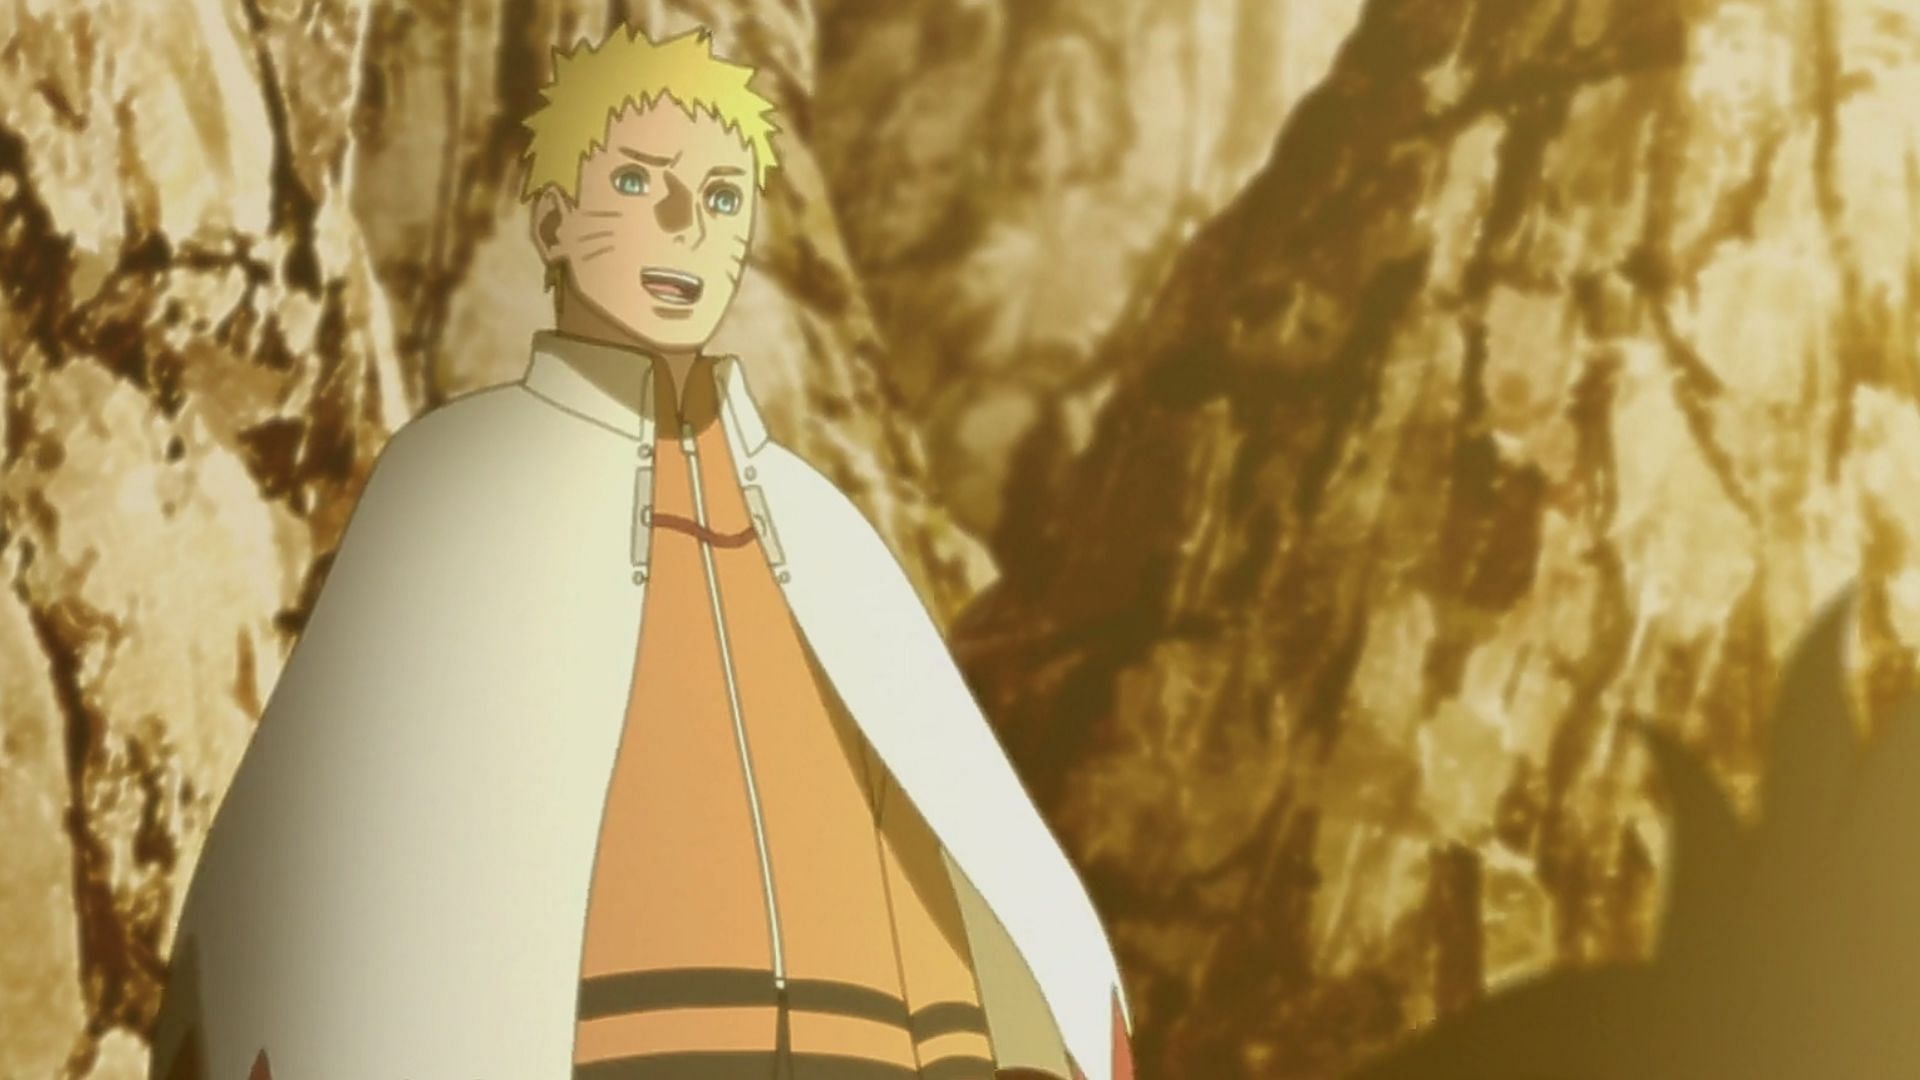 Naruto as seen in Boruto episode 289 (Image via Studio Pierrot)